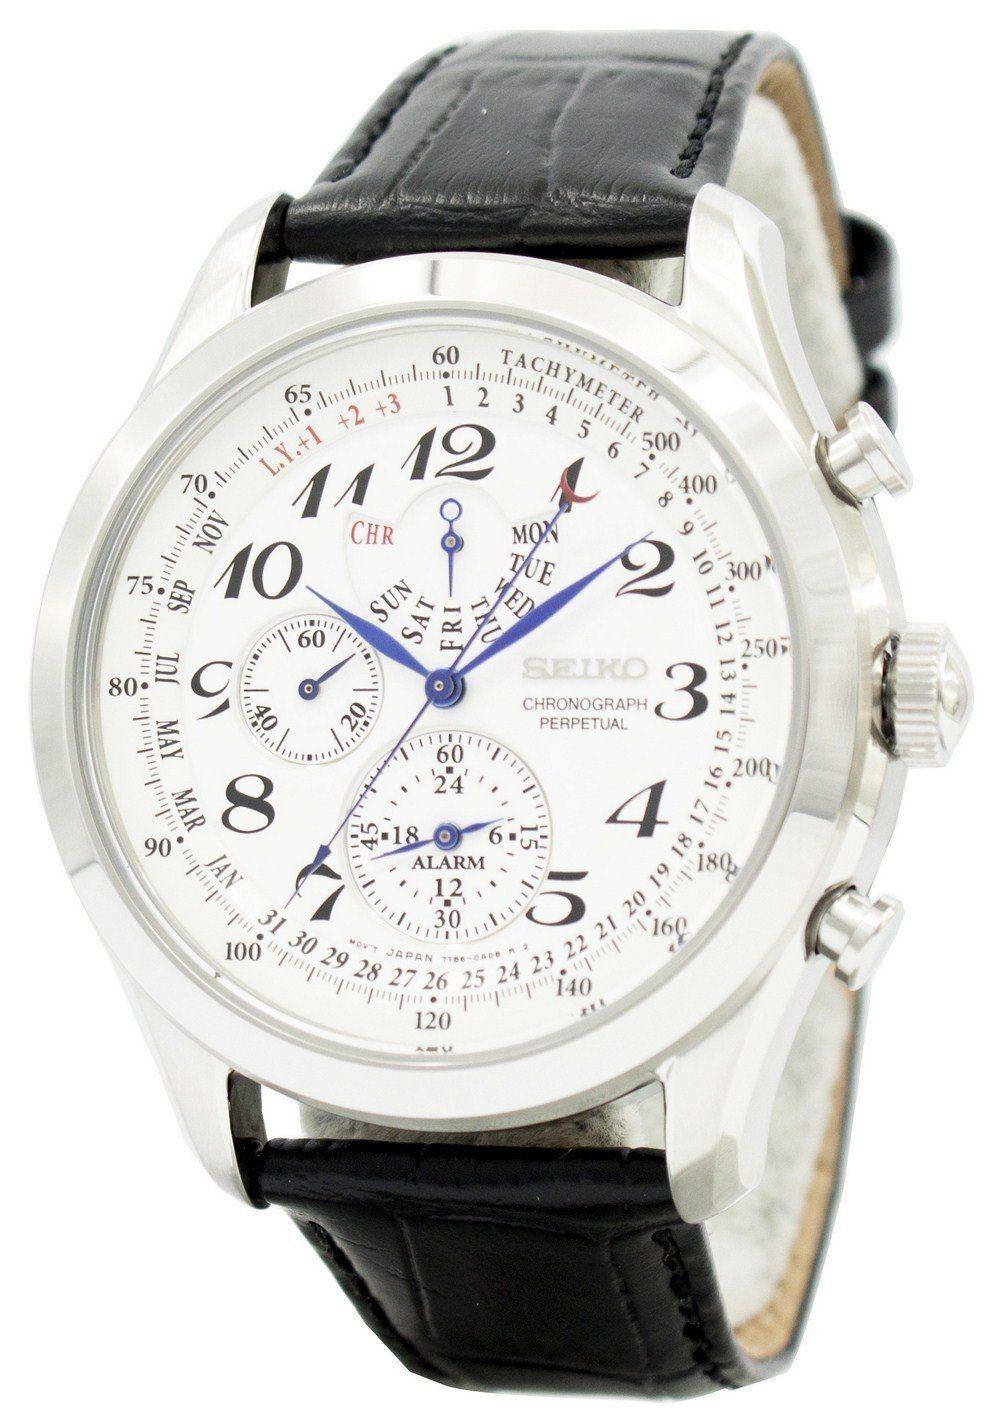 Seiko Chronograph Perpetual Calendar SPC131P1 SPC131P MEN'S Watch eBay